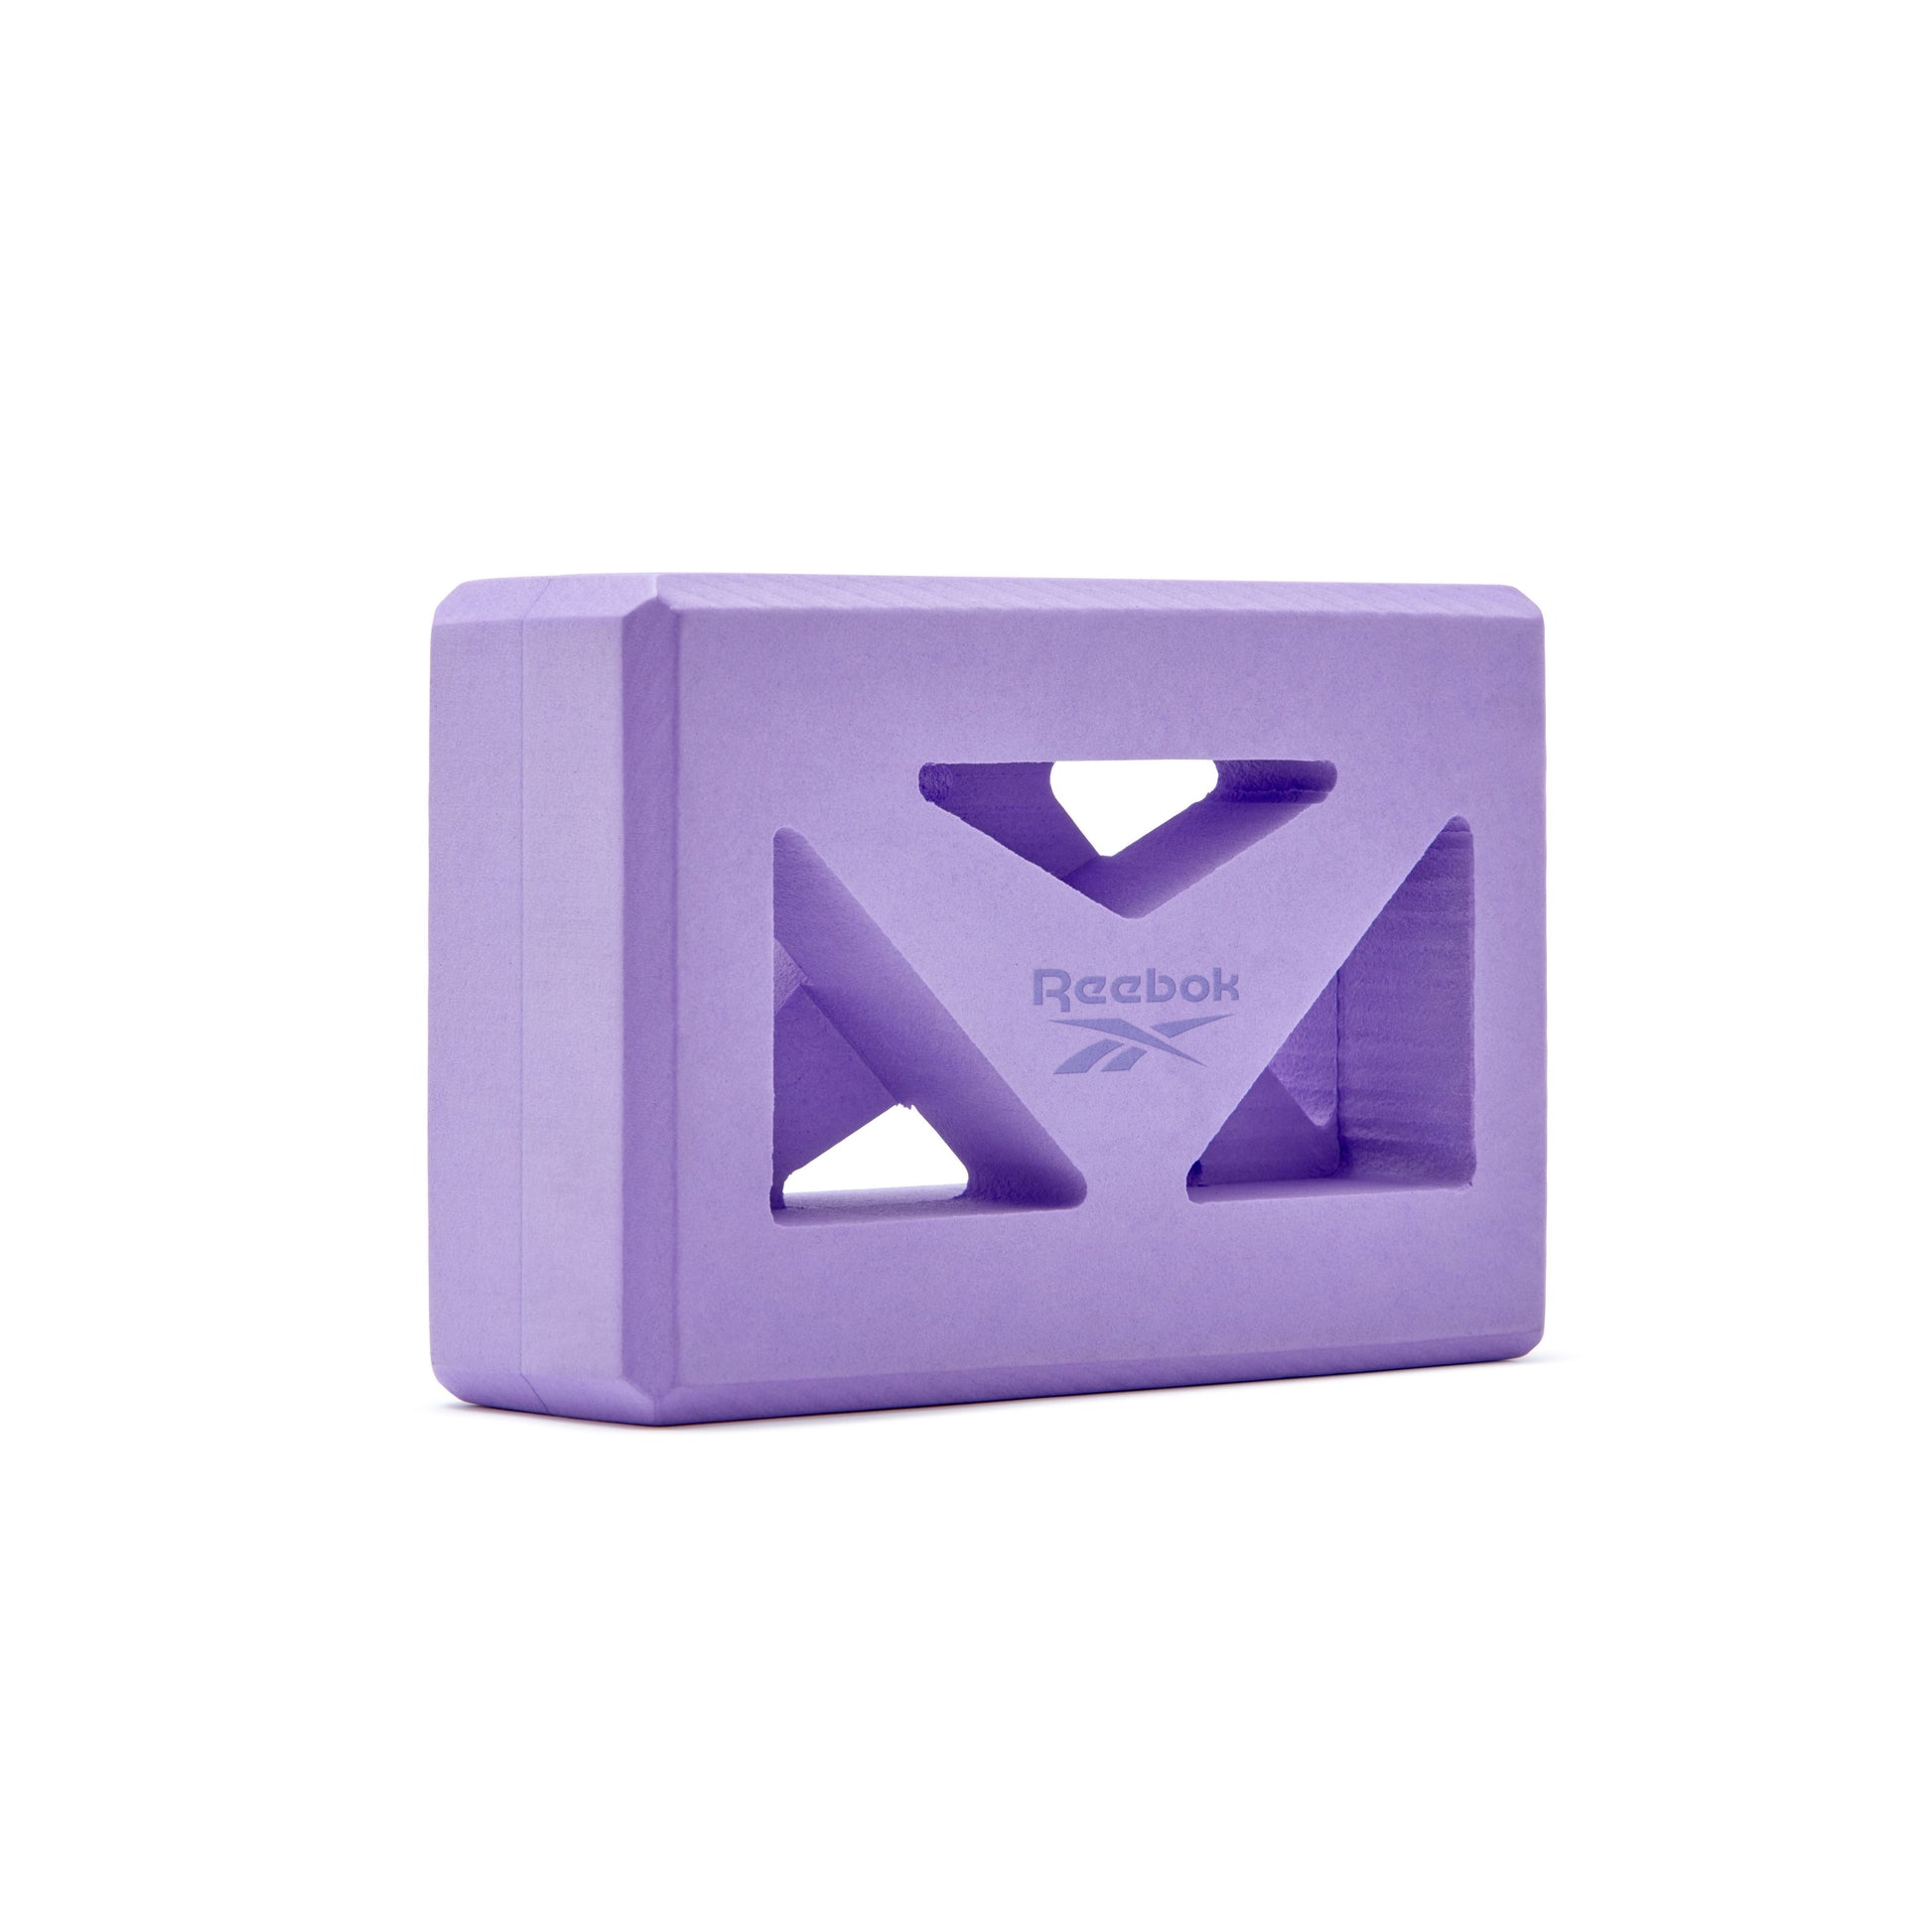 bloque para yoga reebok con diseño lila